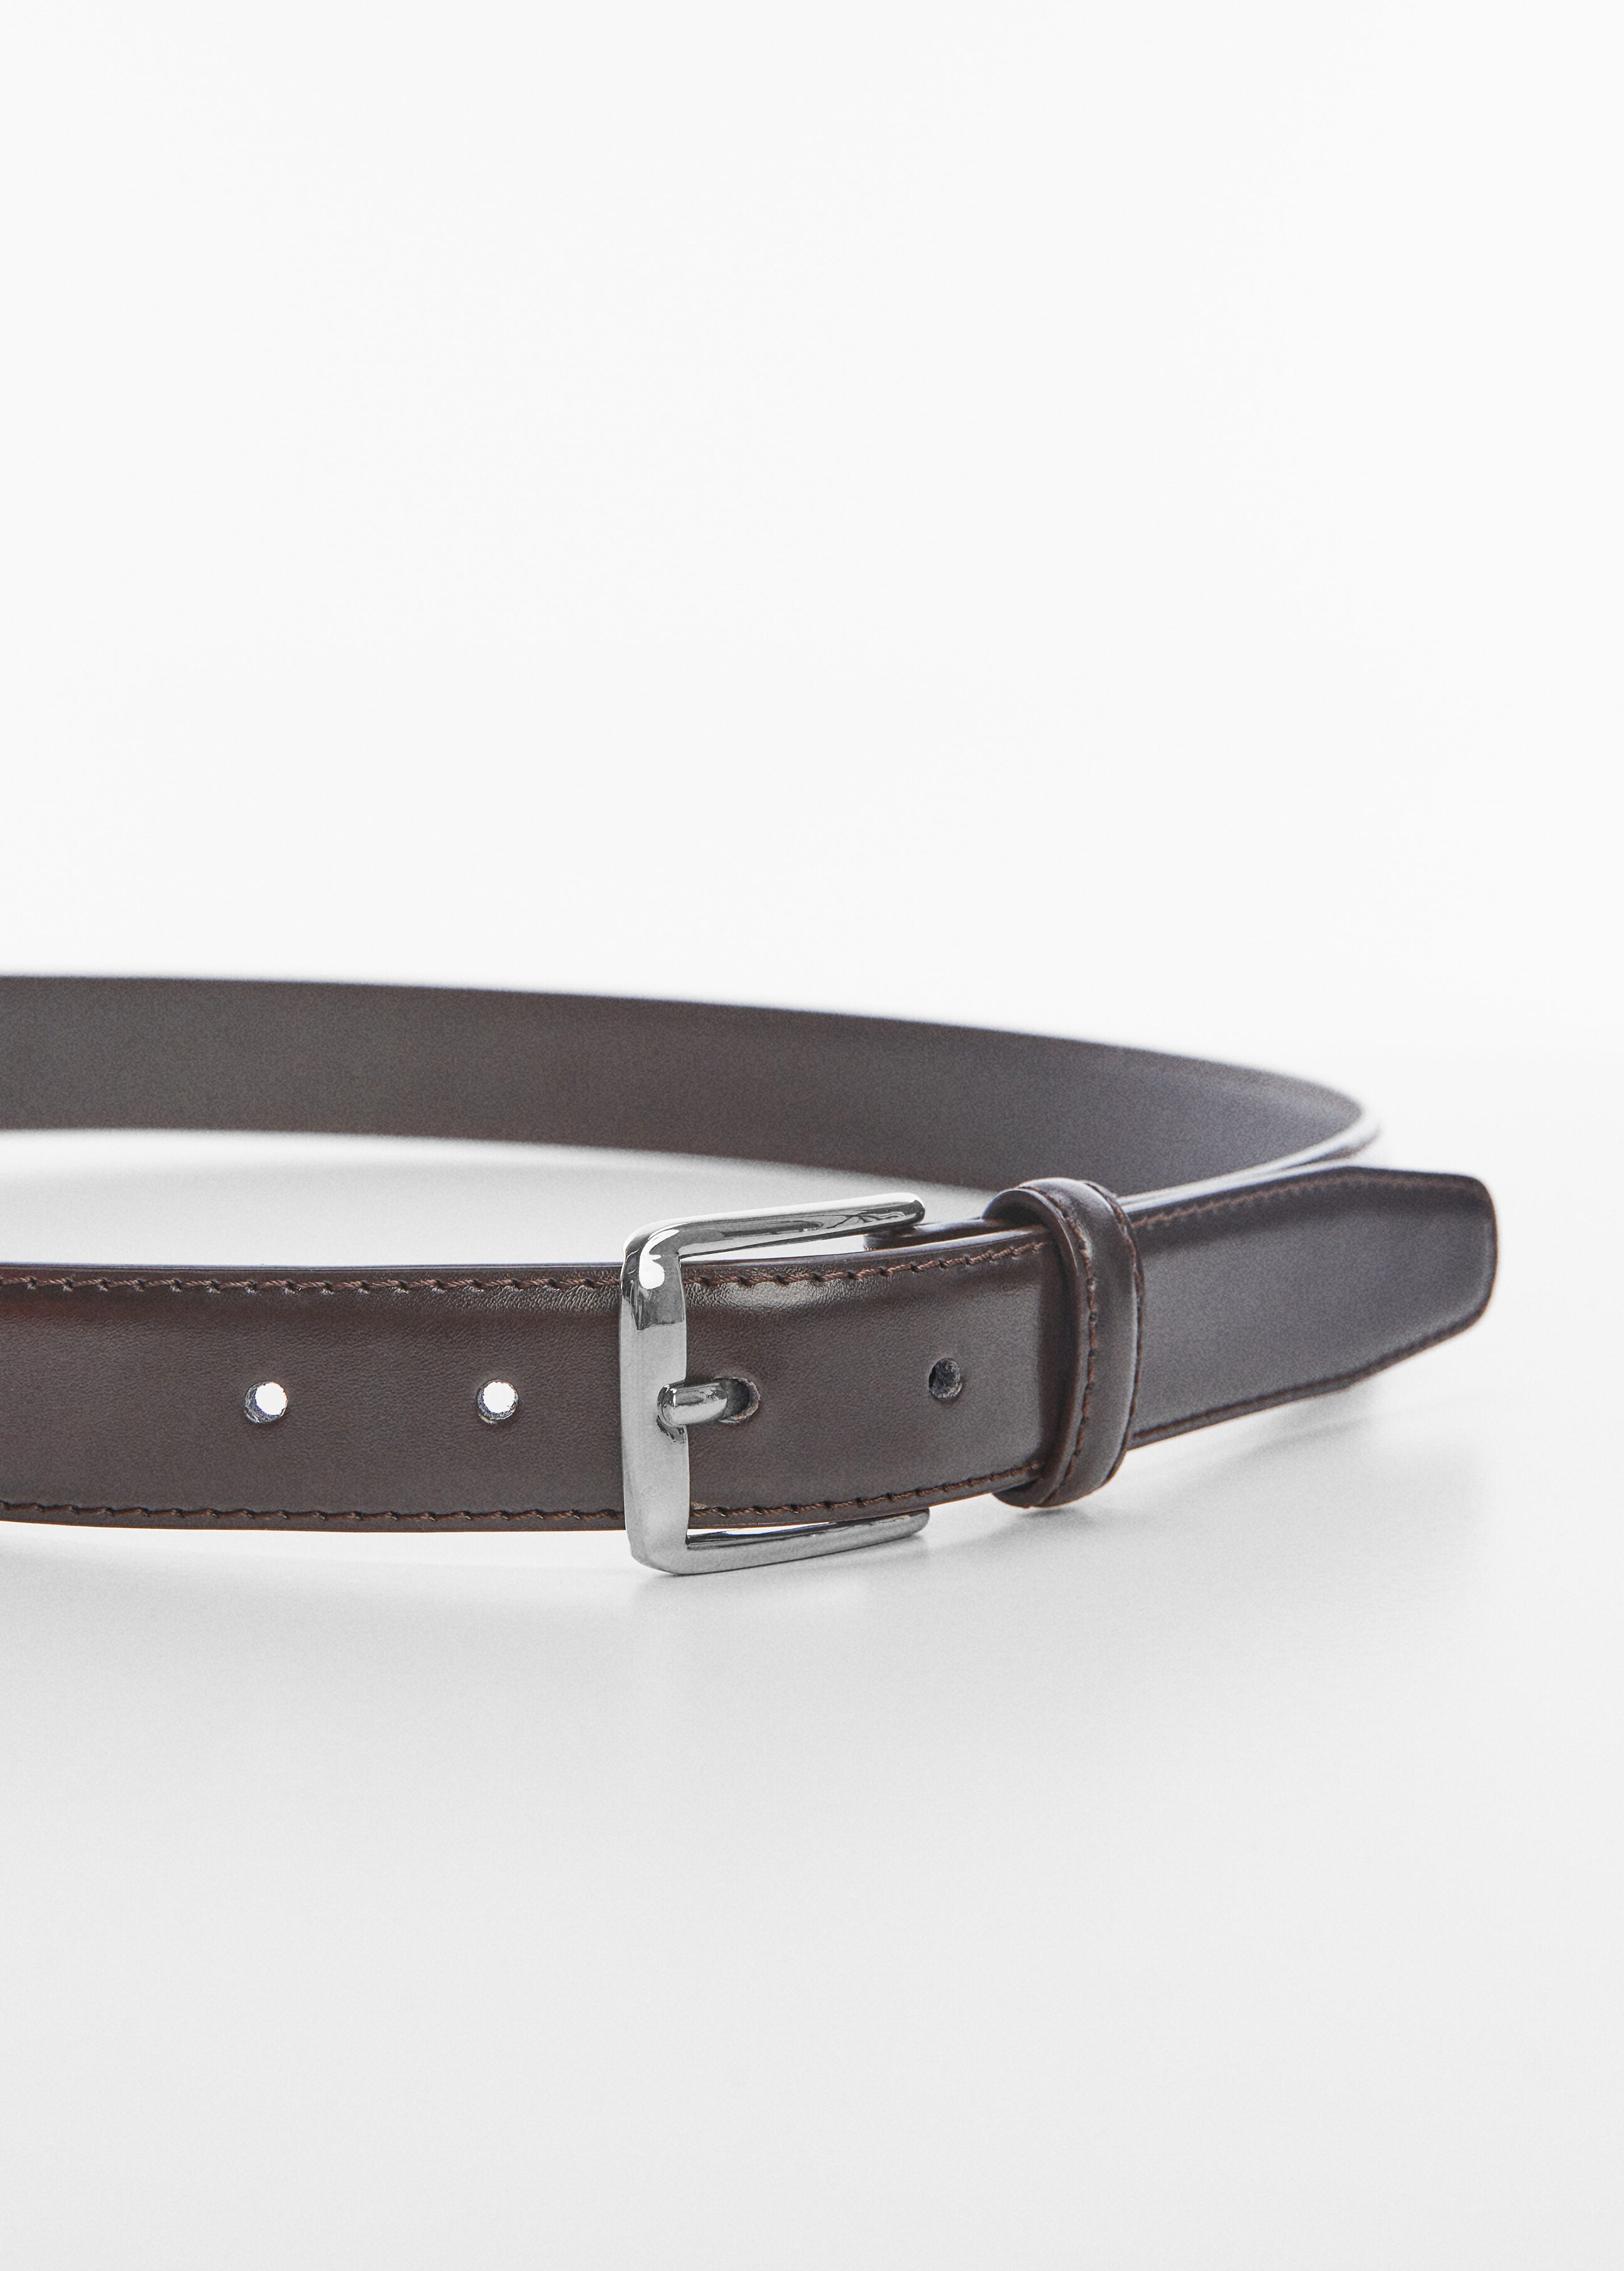 Leather belt - Medium plane